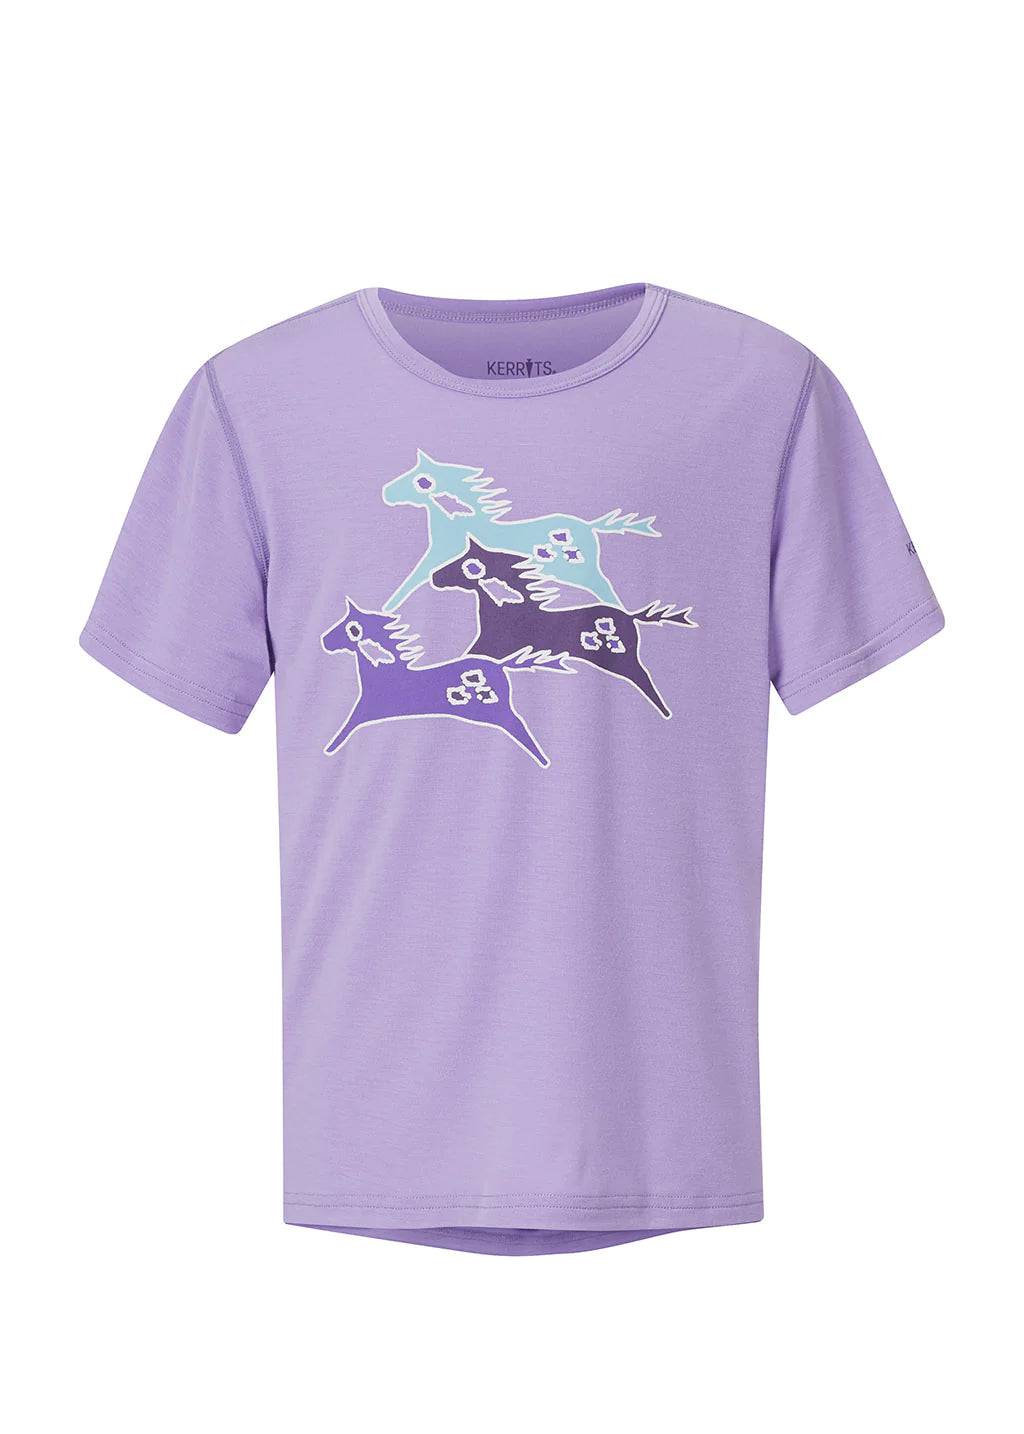 Kerrits Kids Painted Horse Tee Shirt - Equine Exchange Tack Shop